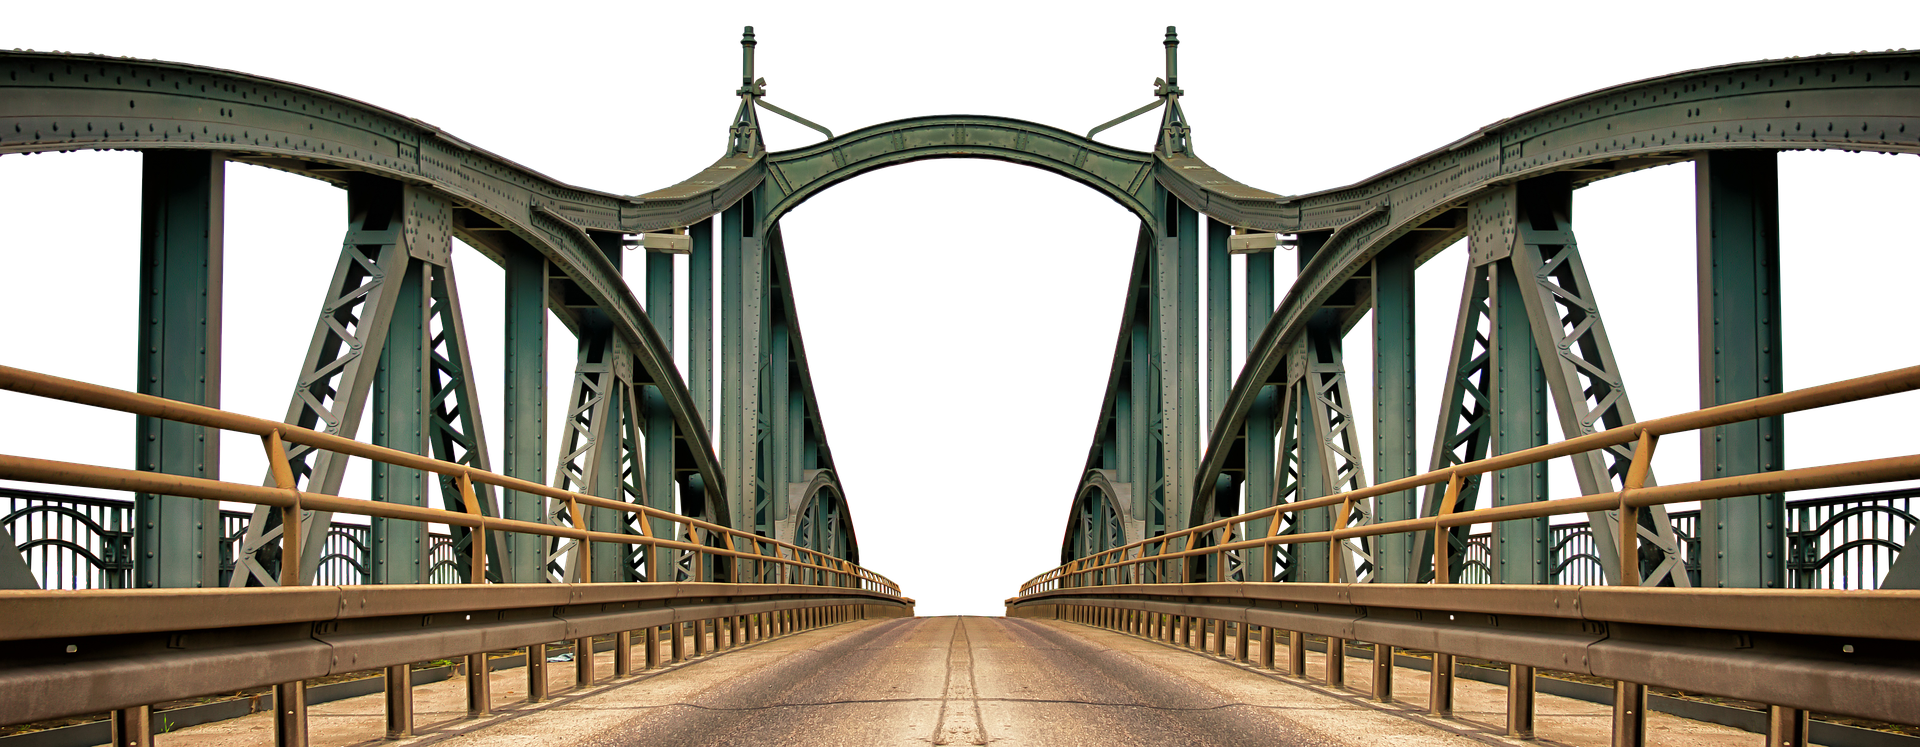 steel bridges project photos